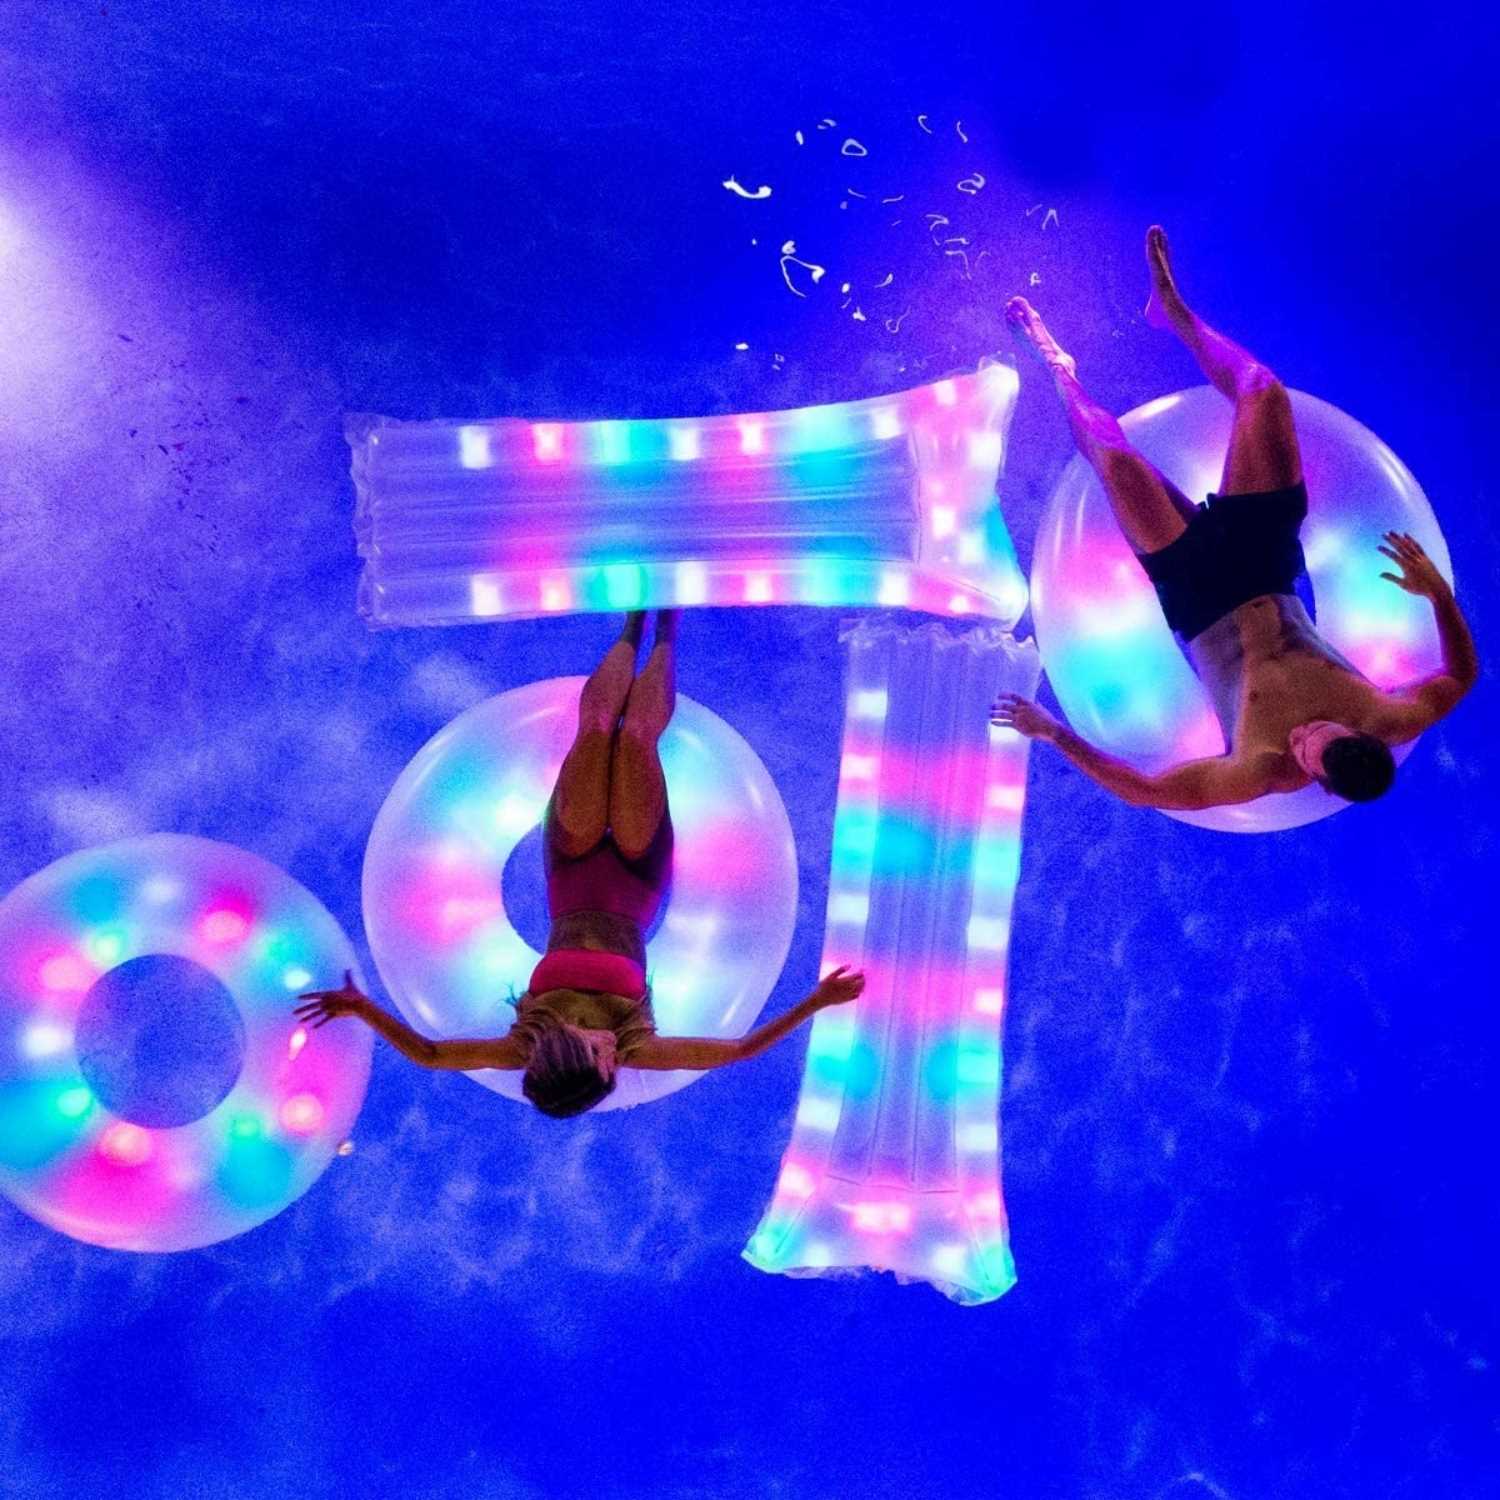 Deluxe Illuminated LED Pocket Pool Raft Guy and Girl - Fun Gift For Men